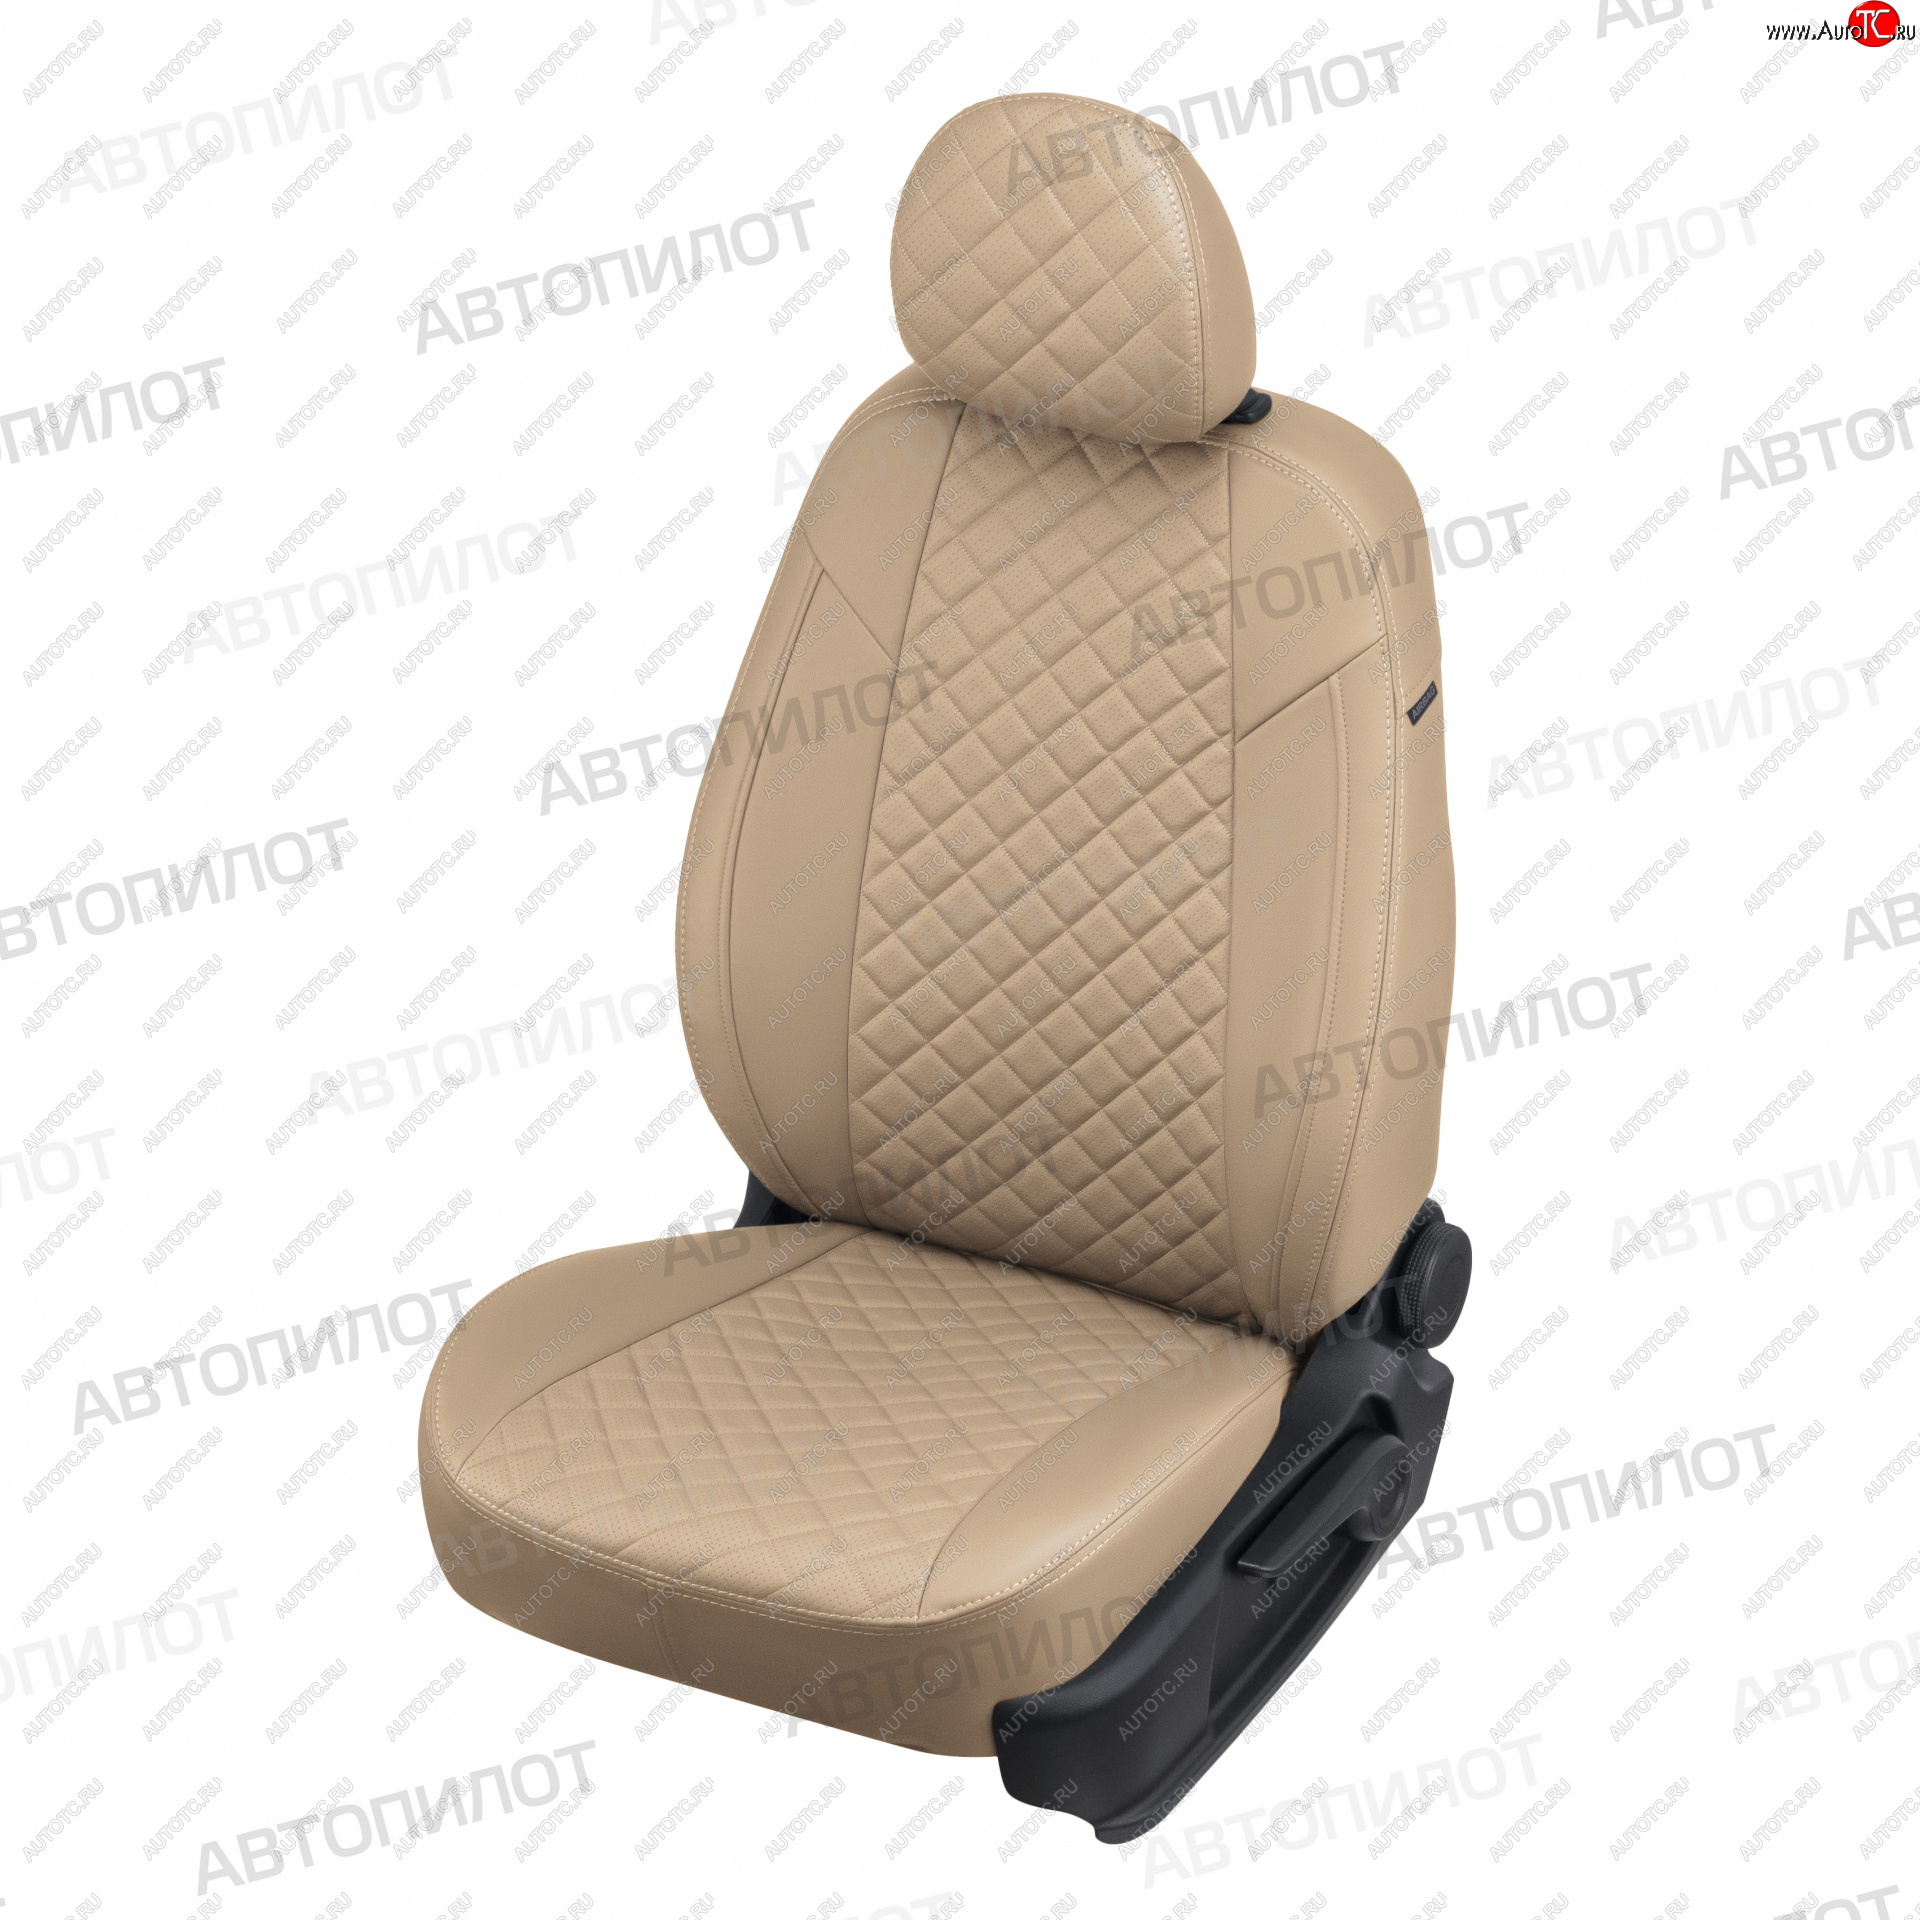 13 999 р. Чехлы сидений (экокожа) Автопилот Ромб  Lexus IS  250 XE20 седан (2005-2013) (темно-бежевый)